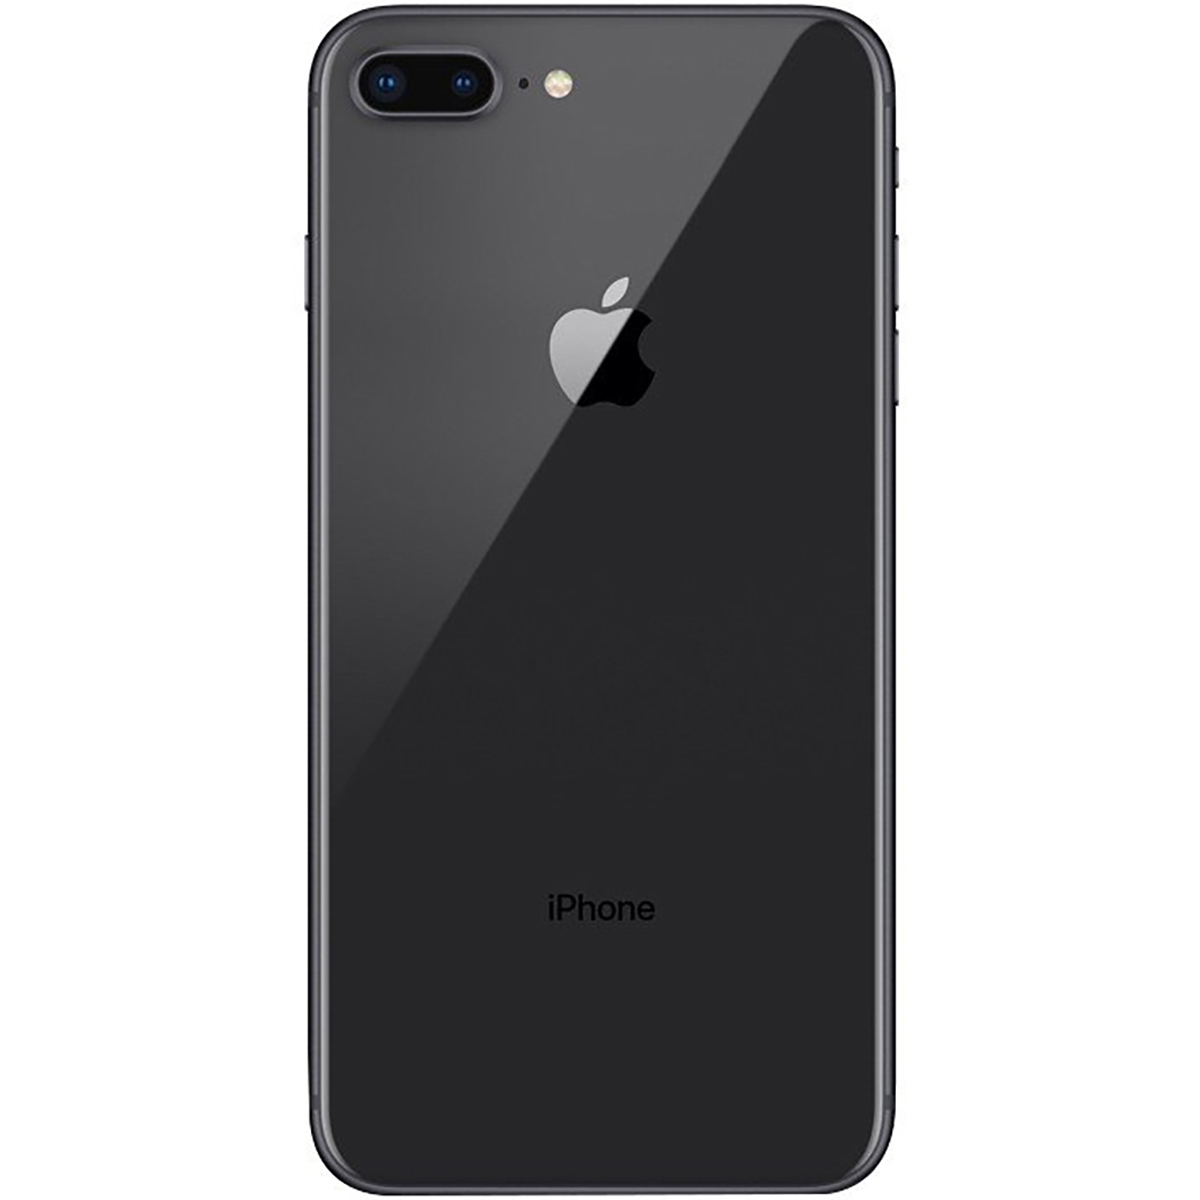 Smartphone Apple iPhone 8 Plus 64GB Tela 5.5" Câmera 12MP